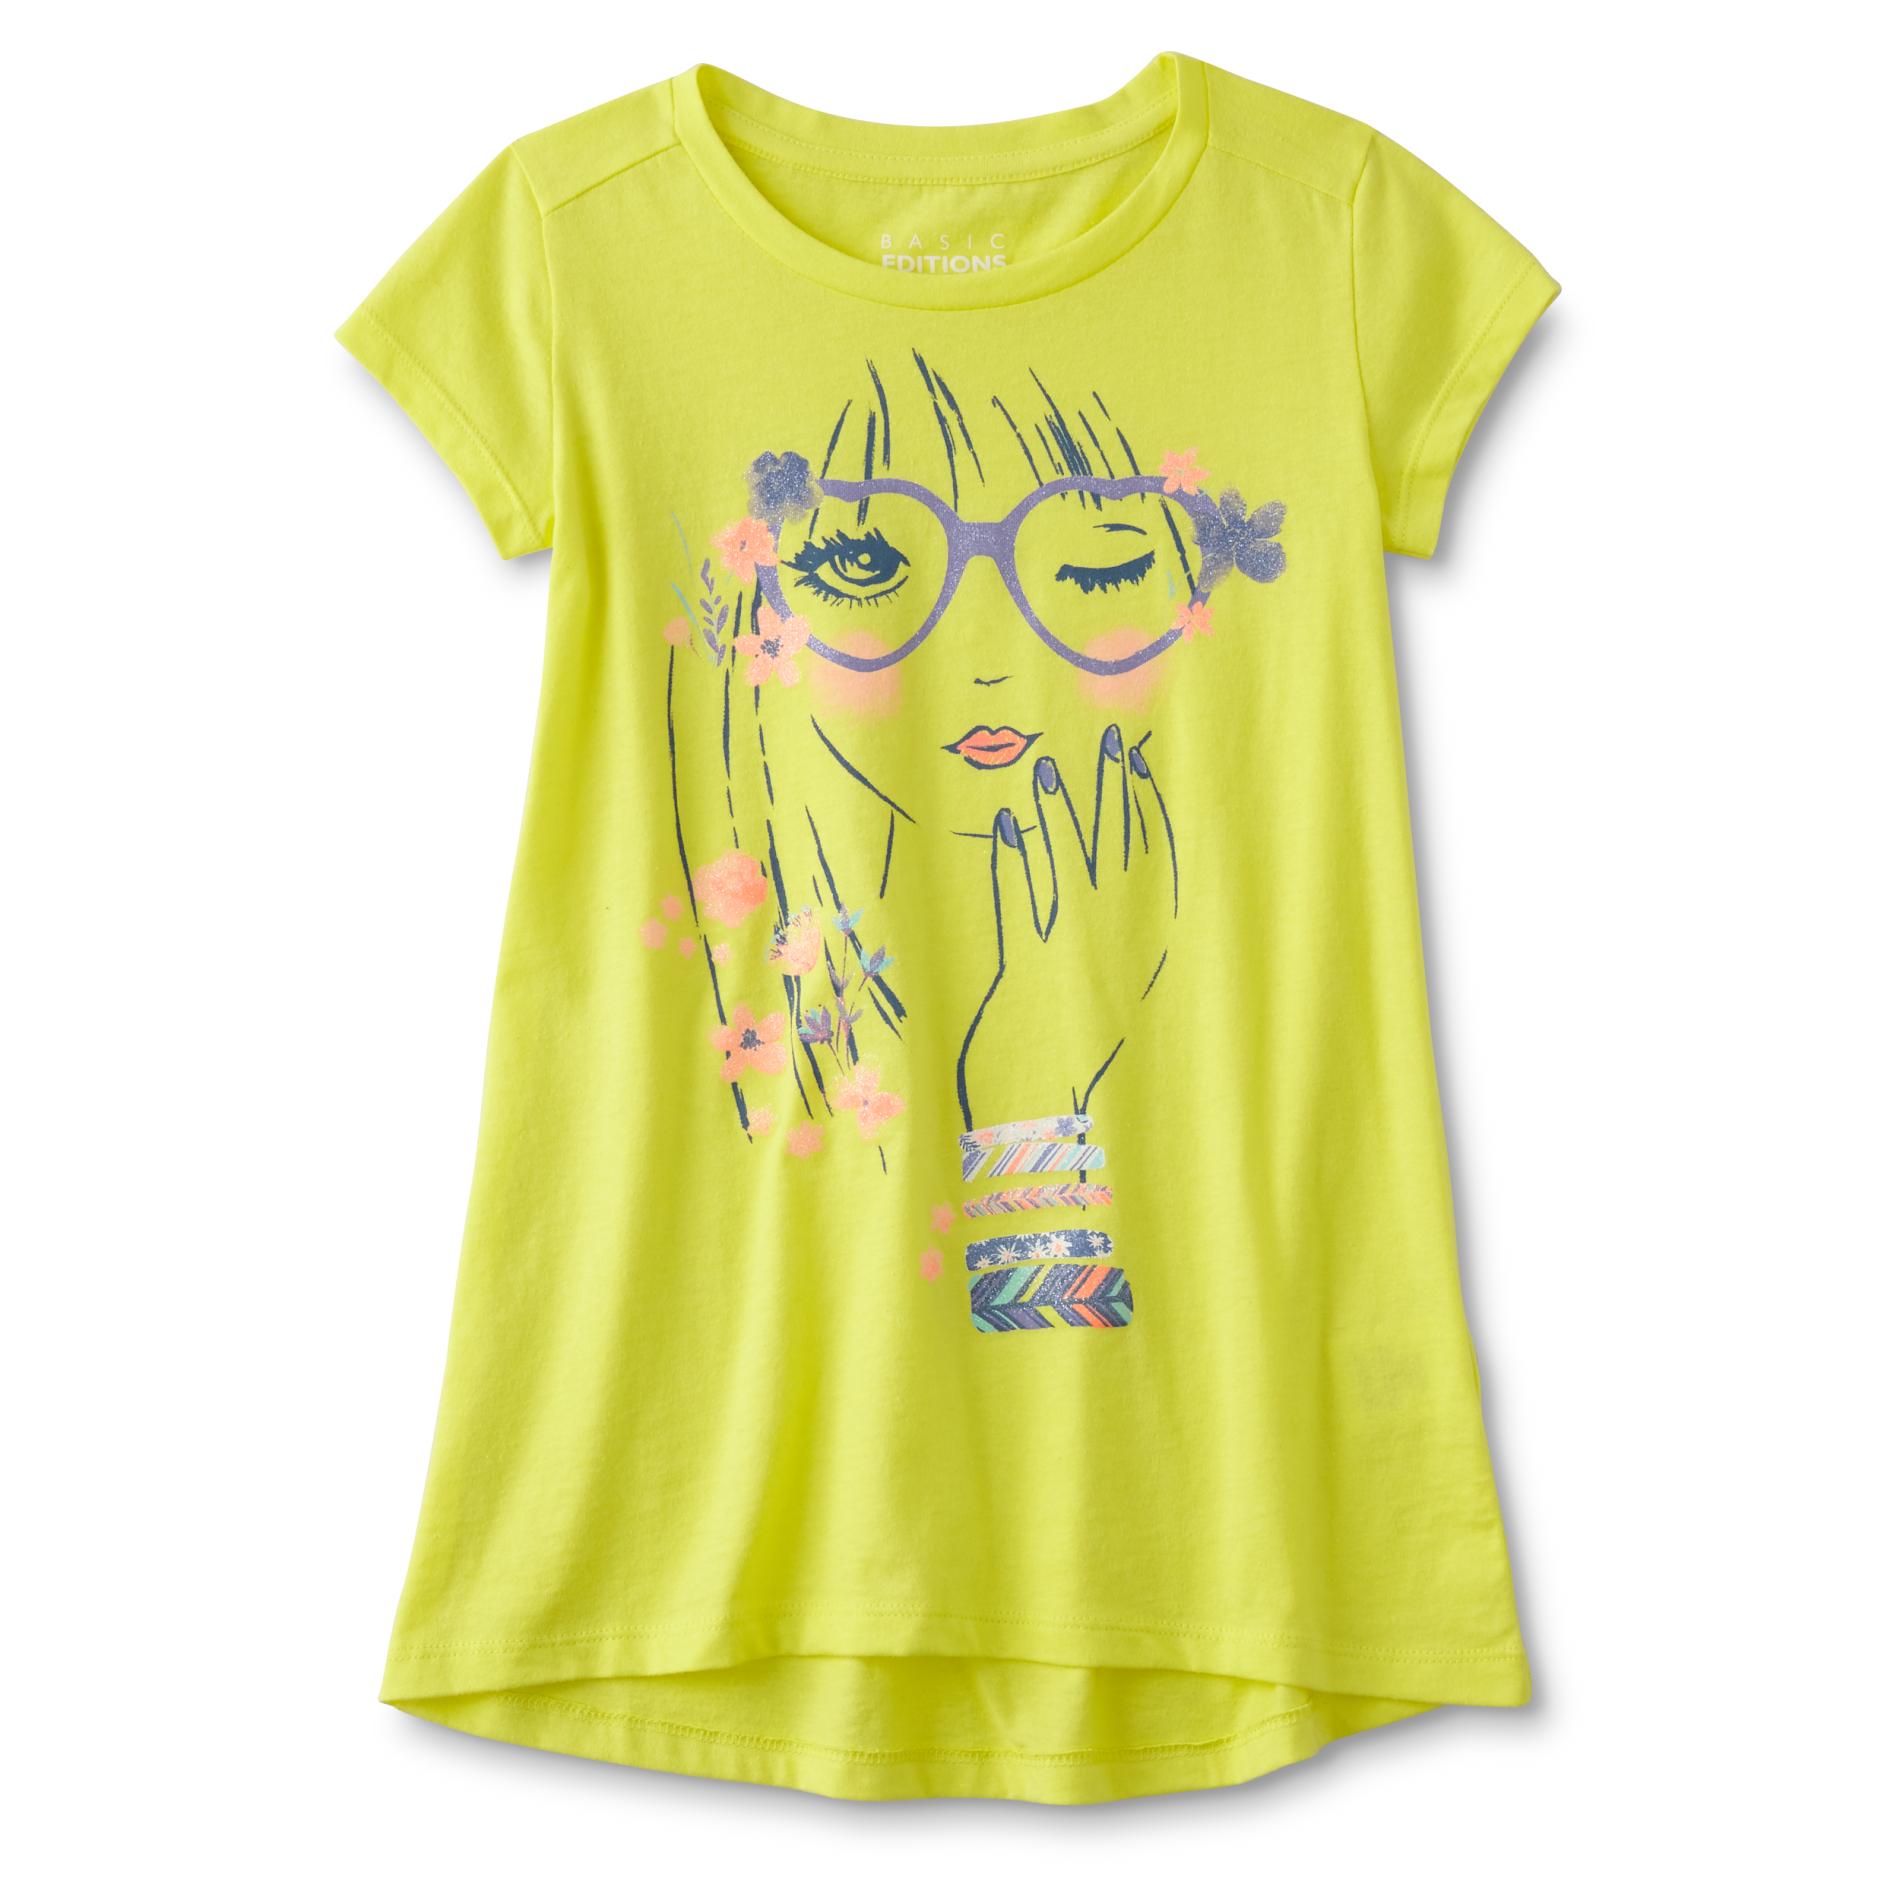 Basic Editions Girls' Graphic T-Shirt - Bracelet Girl